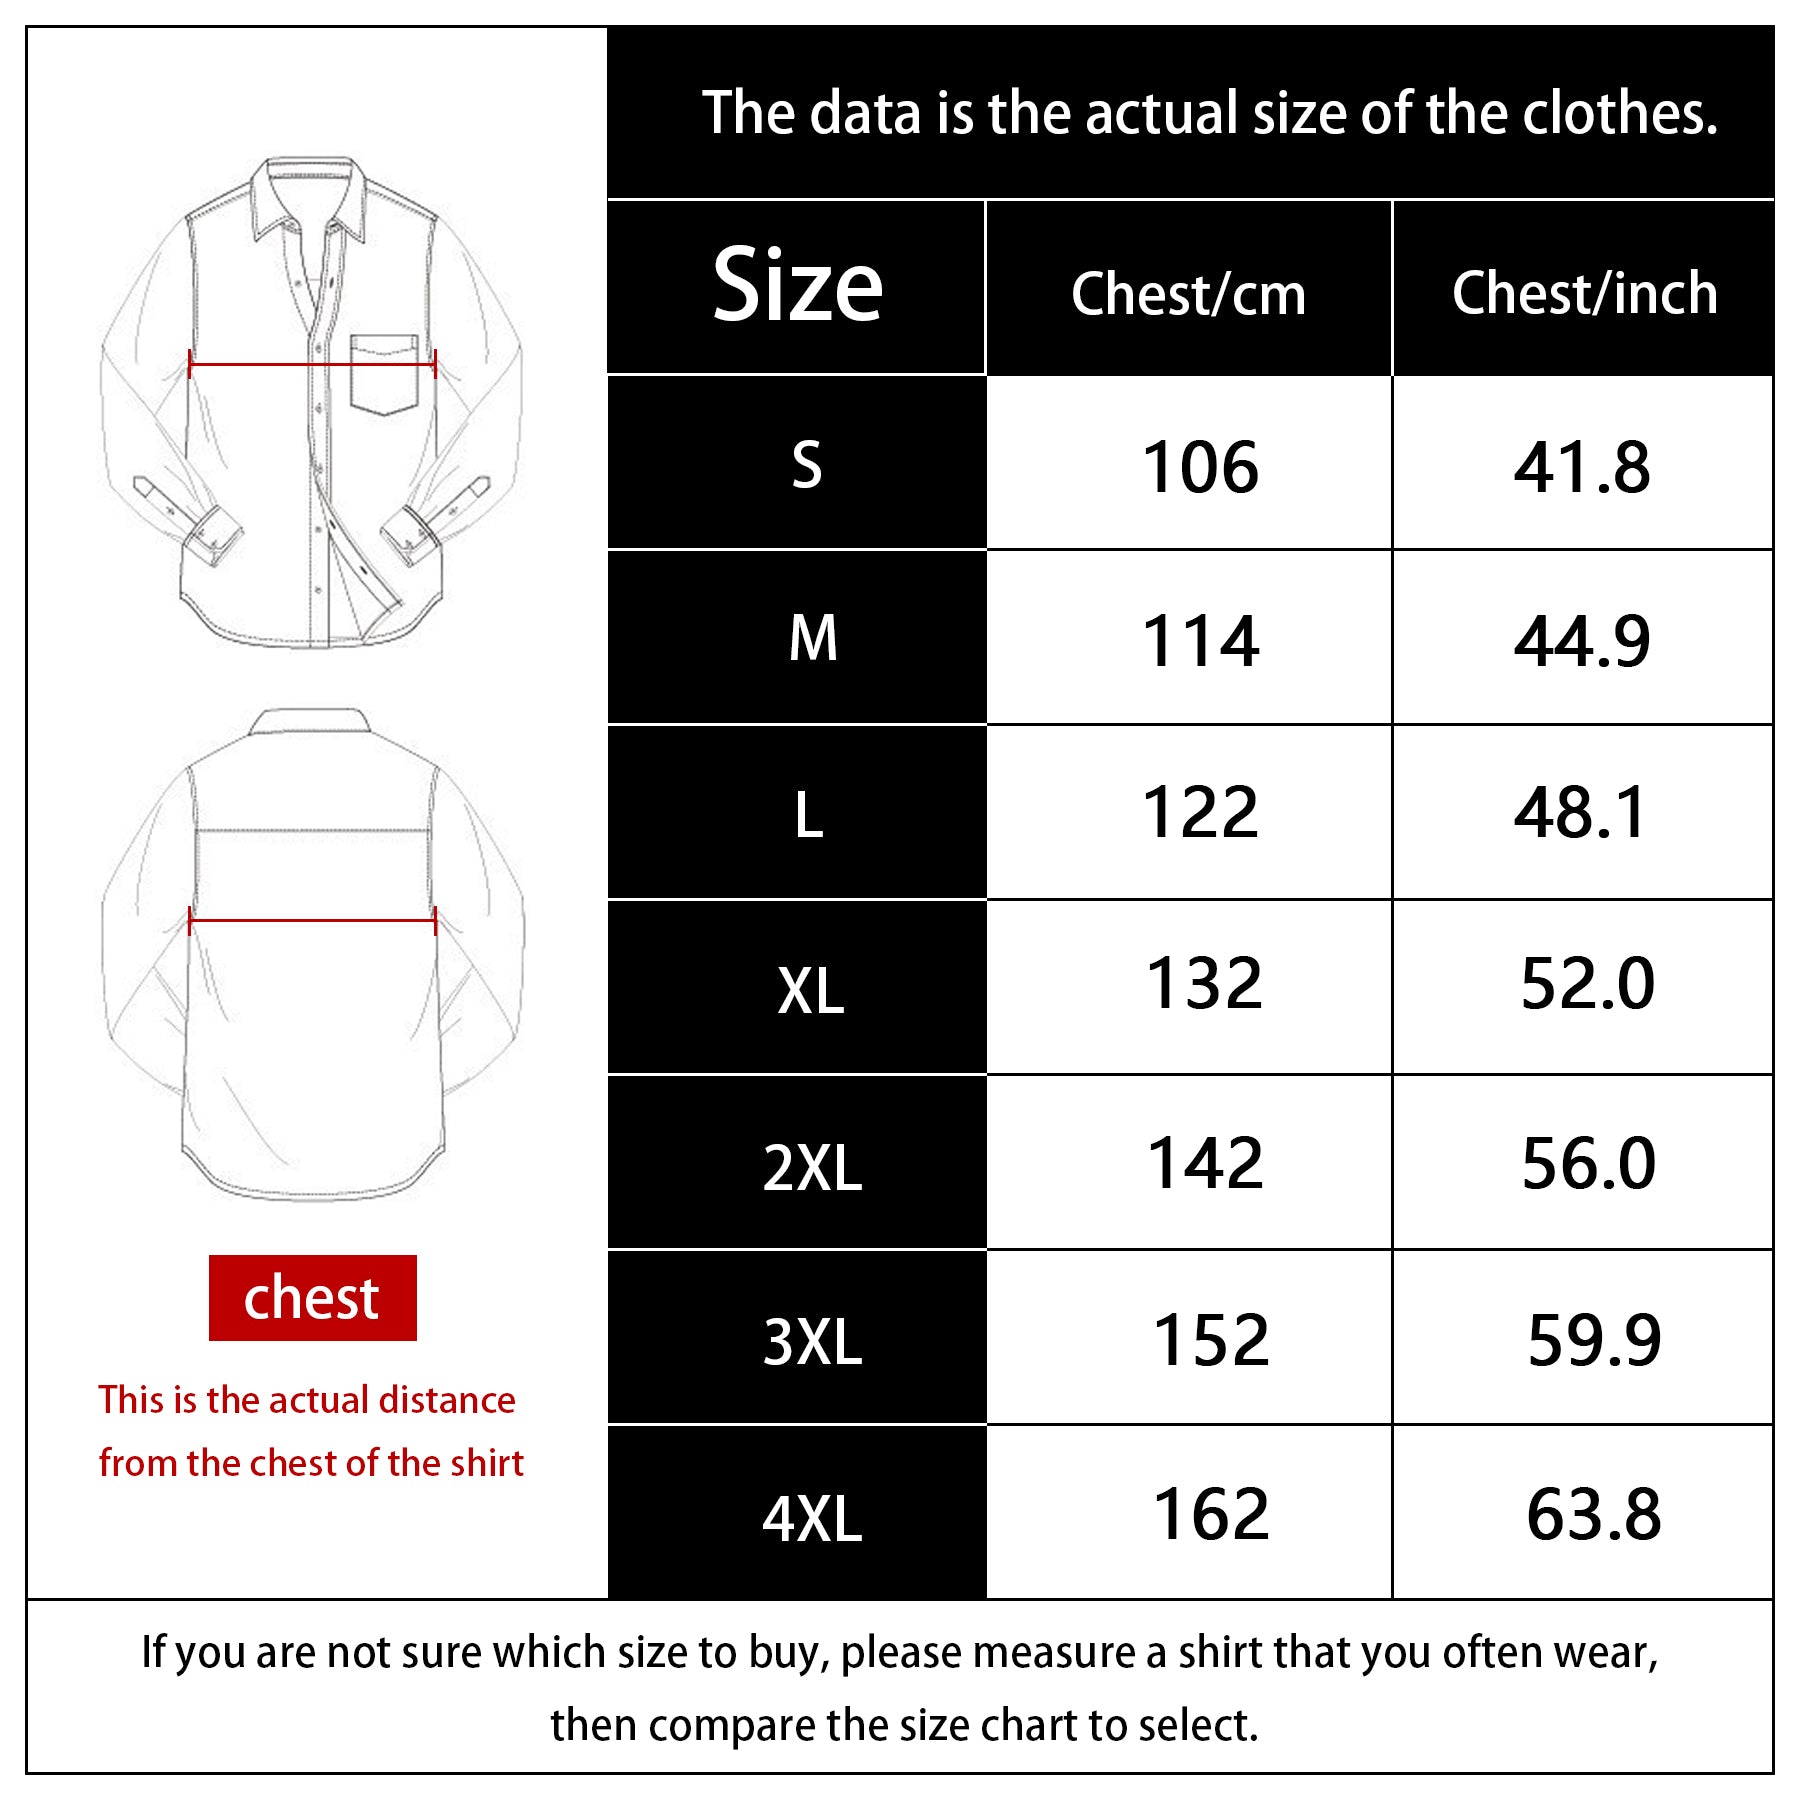 Men's casual short-sleeved cotton shirt #0018